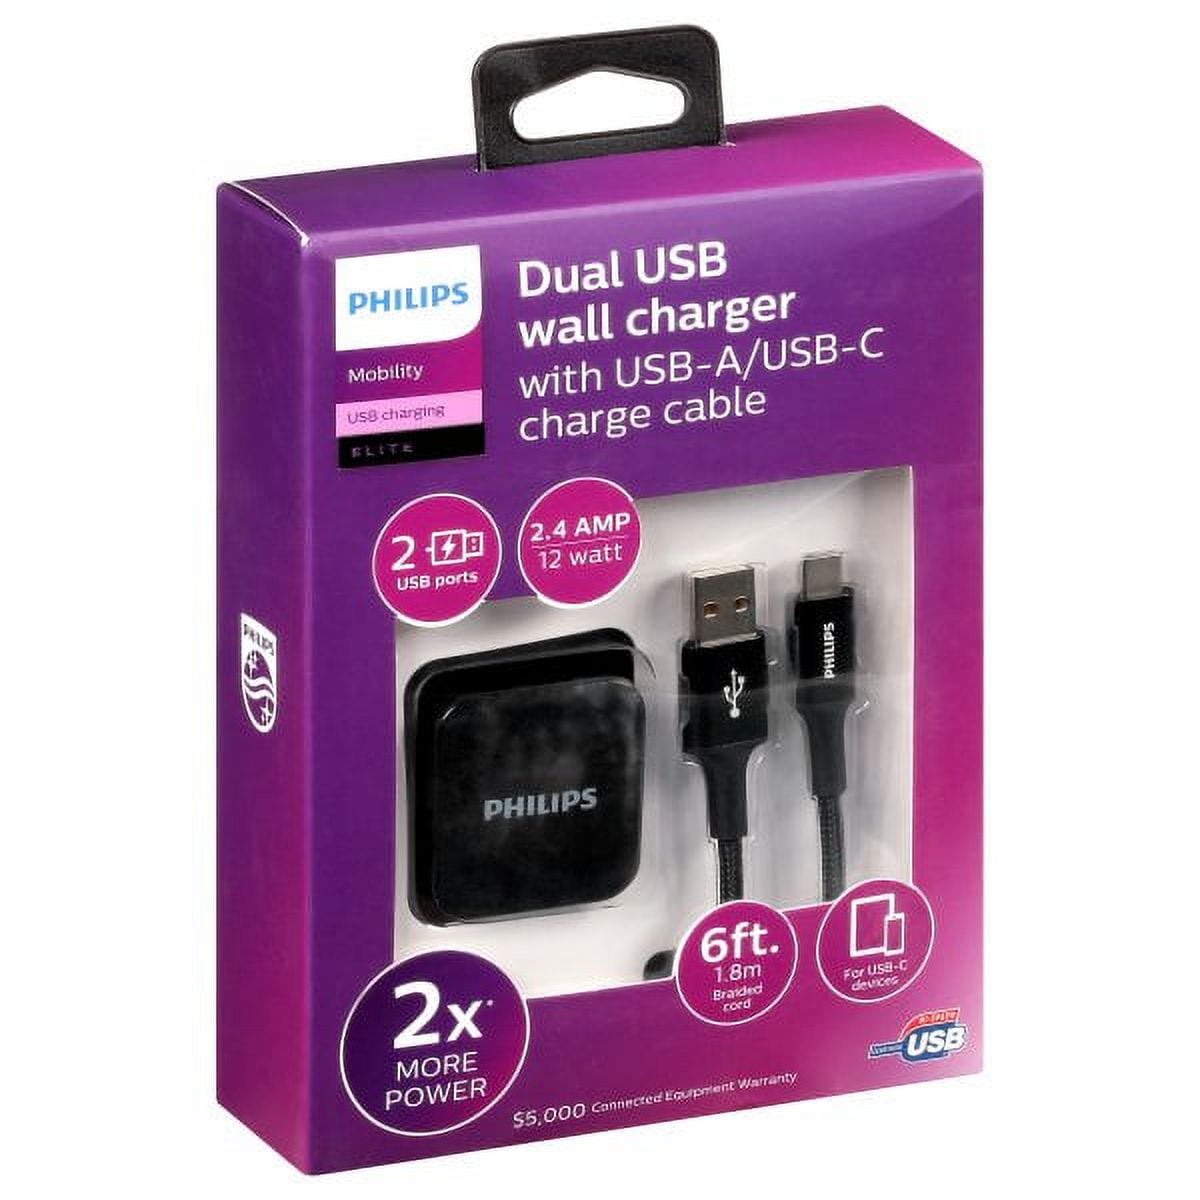 Philips Wall Charger Charging Kit, 2 Port, 12W, USB-A to USB-C, 6ft  Braided, for iPhone 12/11/Pro/Max/XS/XR/X/8, iPad Pro, Samsung Galaxy  S21/S10/S9/Plus, Google Pixel 5/C/3/2/XL, Black, DLP6212C/37